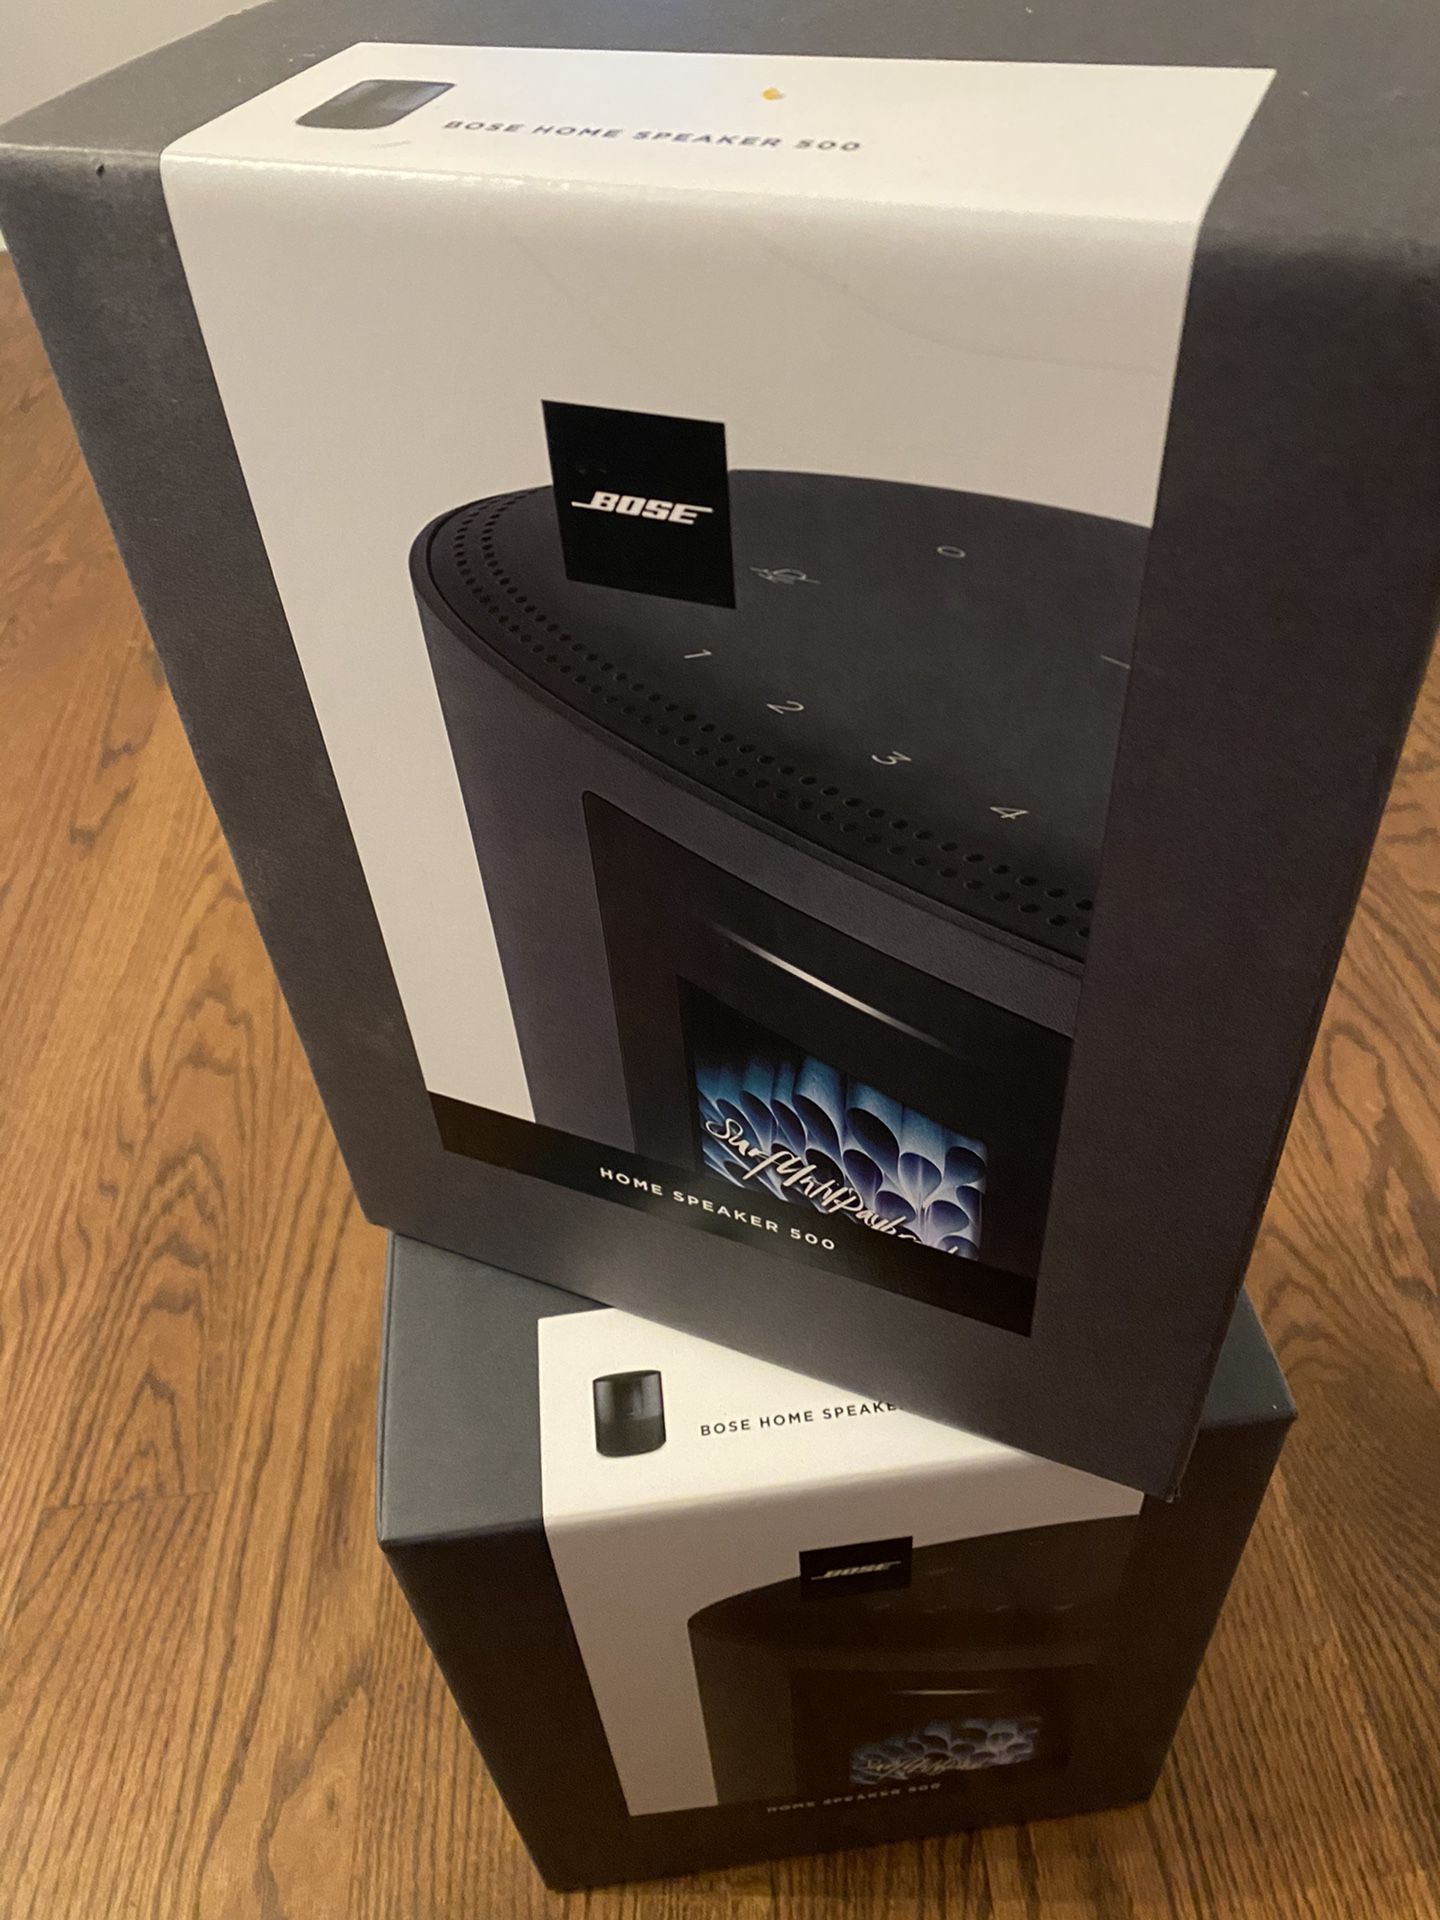 Bose home speaker 500 with Alexa newest model original seals